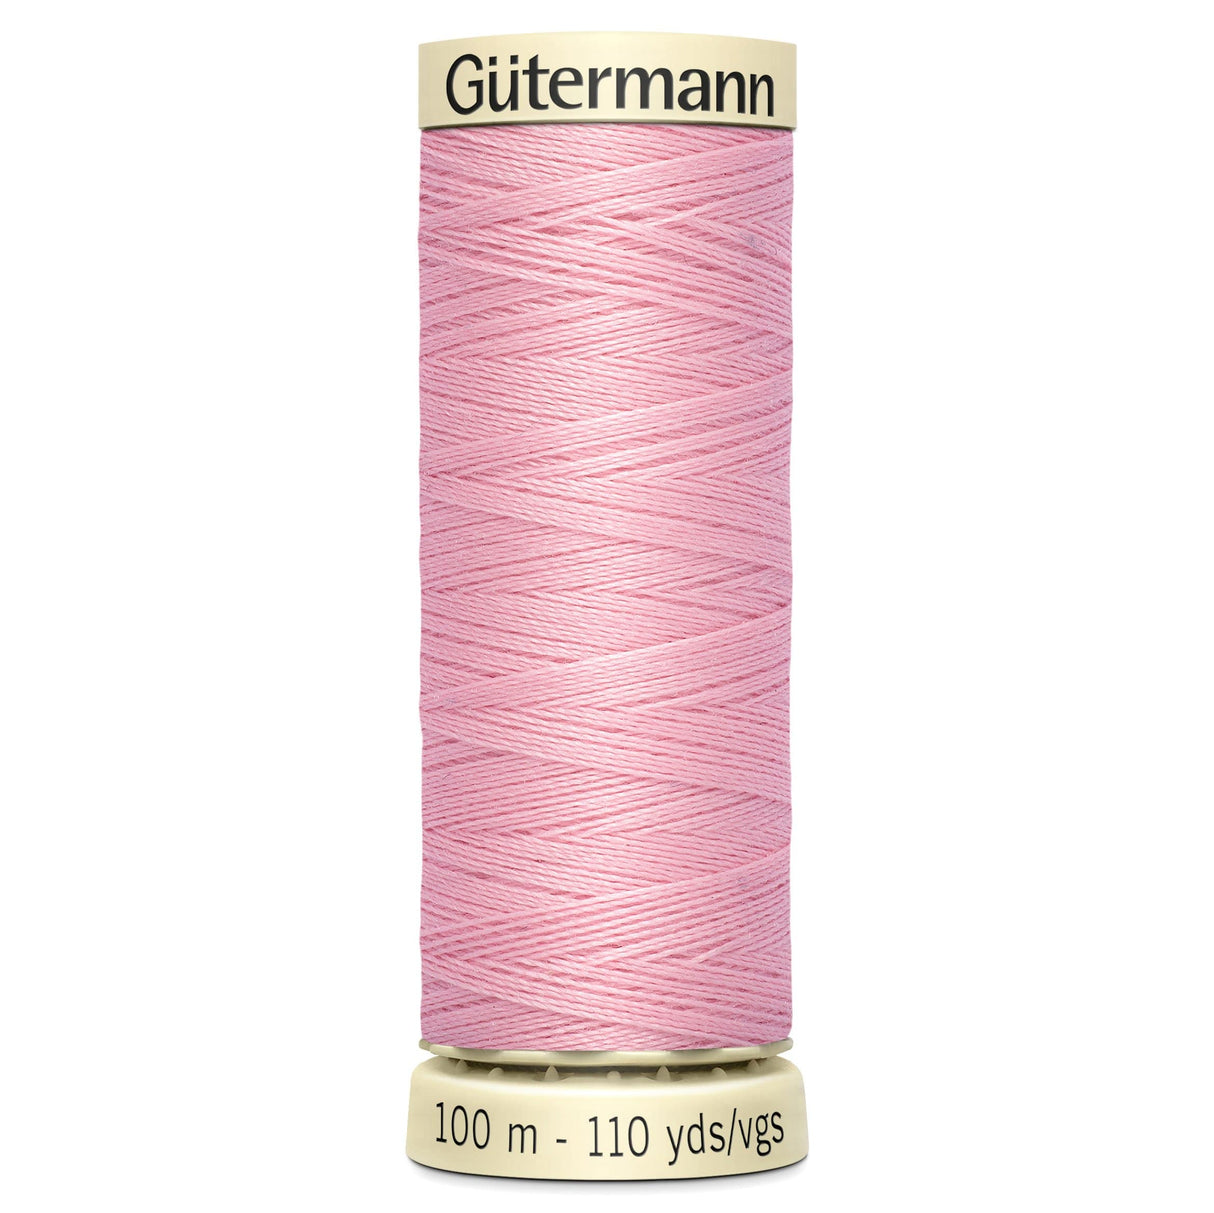 Groves Haberdashery 660 Gutermann Thread Sewing Cotton 100 m Black to Pink